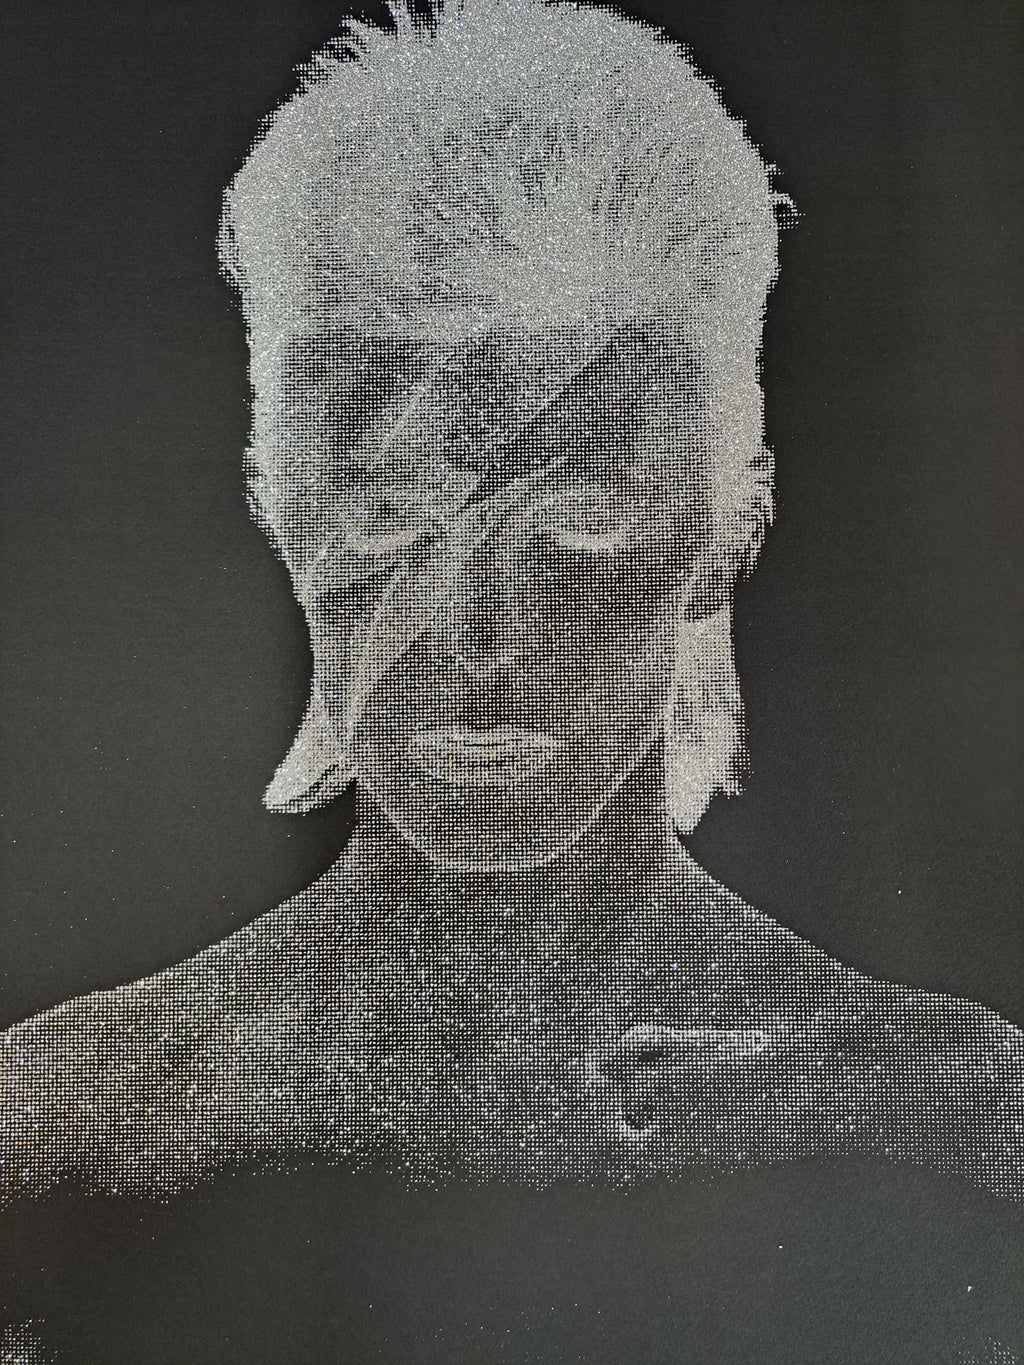 'Love Aladdin Sane' Bowie. White on black with diamond dust